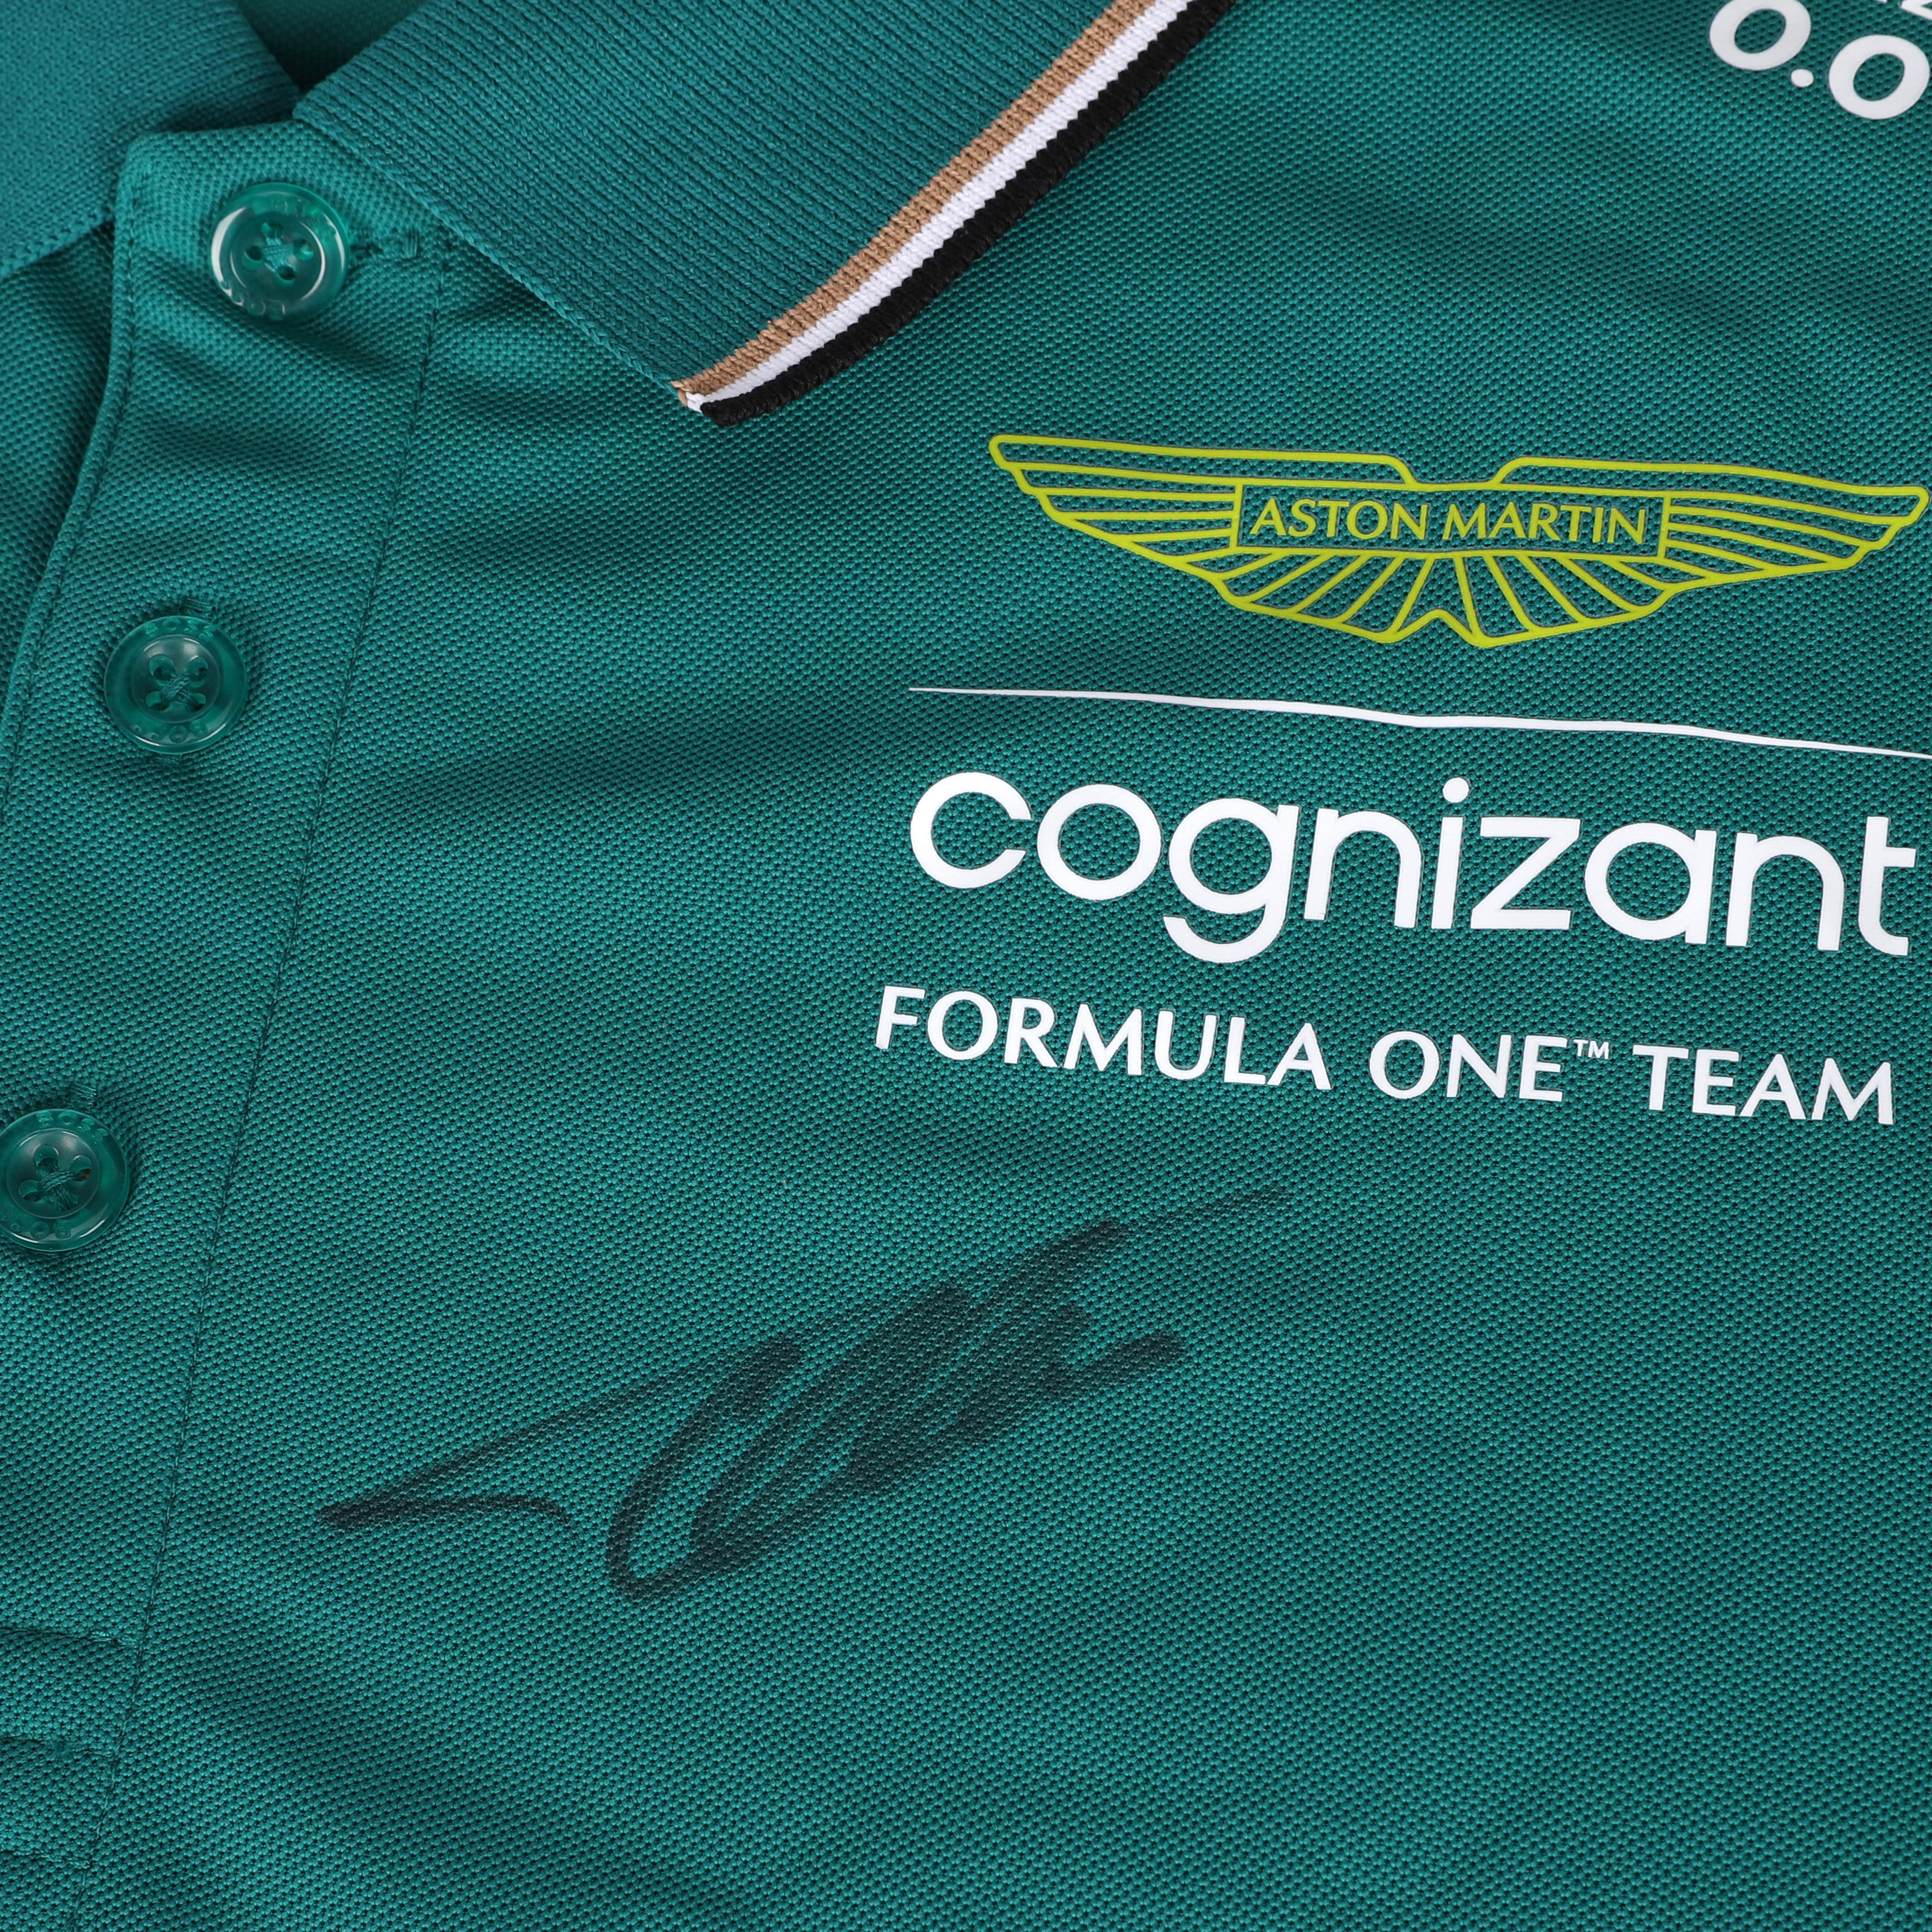 Camiseta Aston Martin Aramco Cognizant F1 Kimoa Fernando Alonso